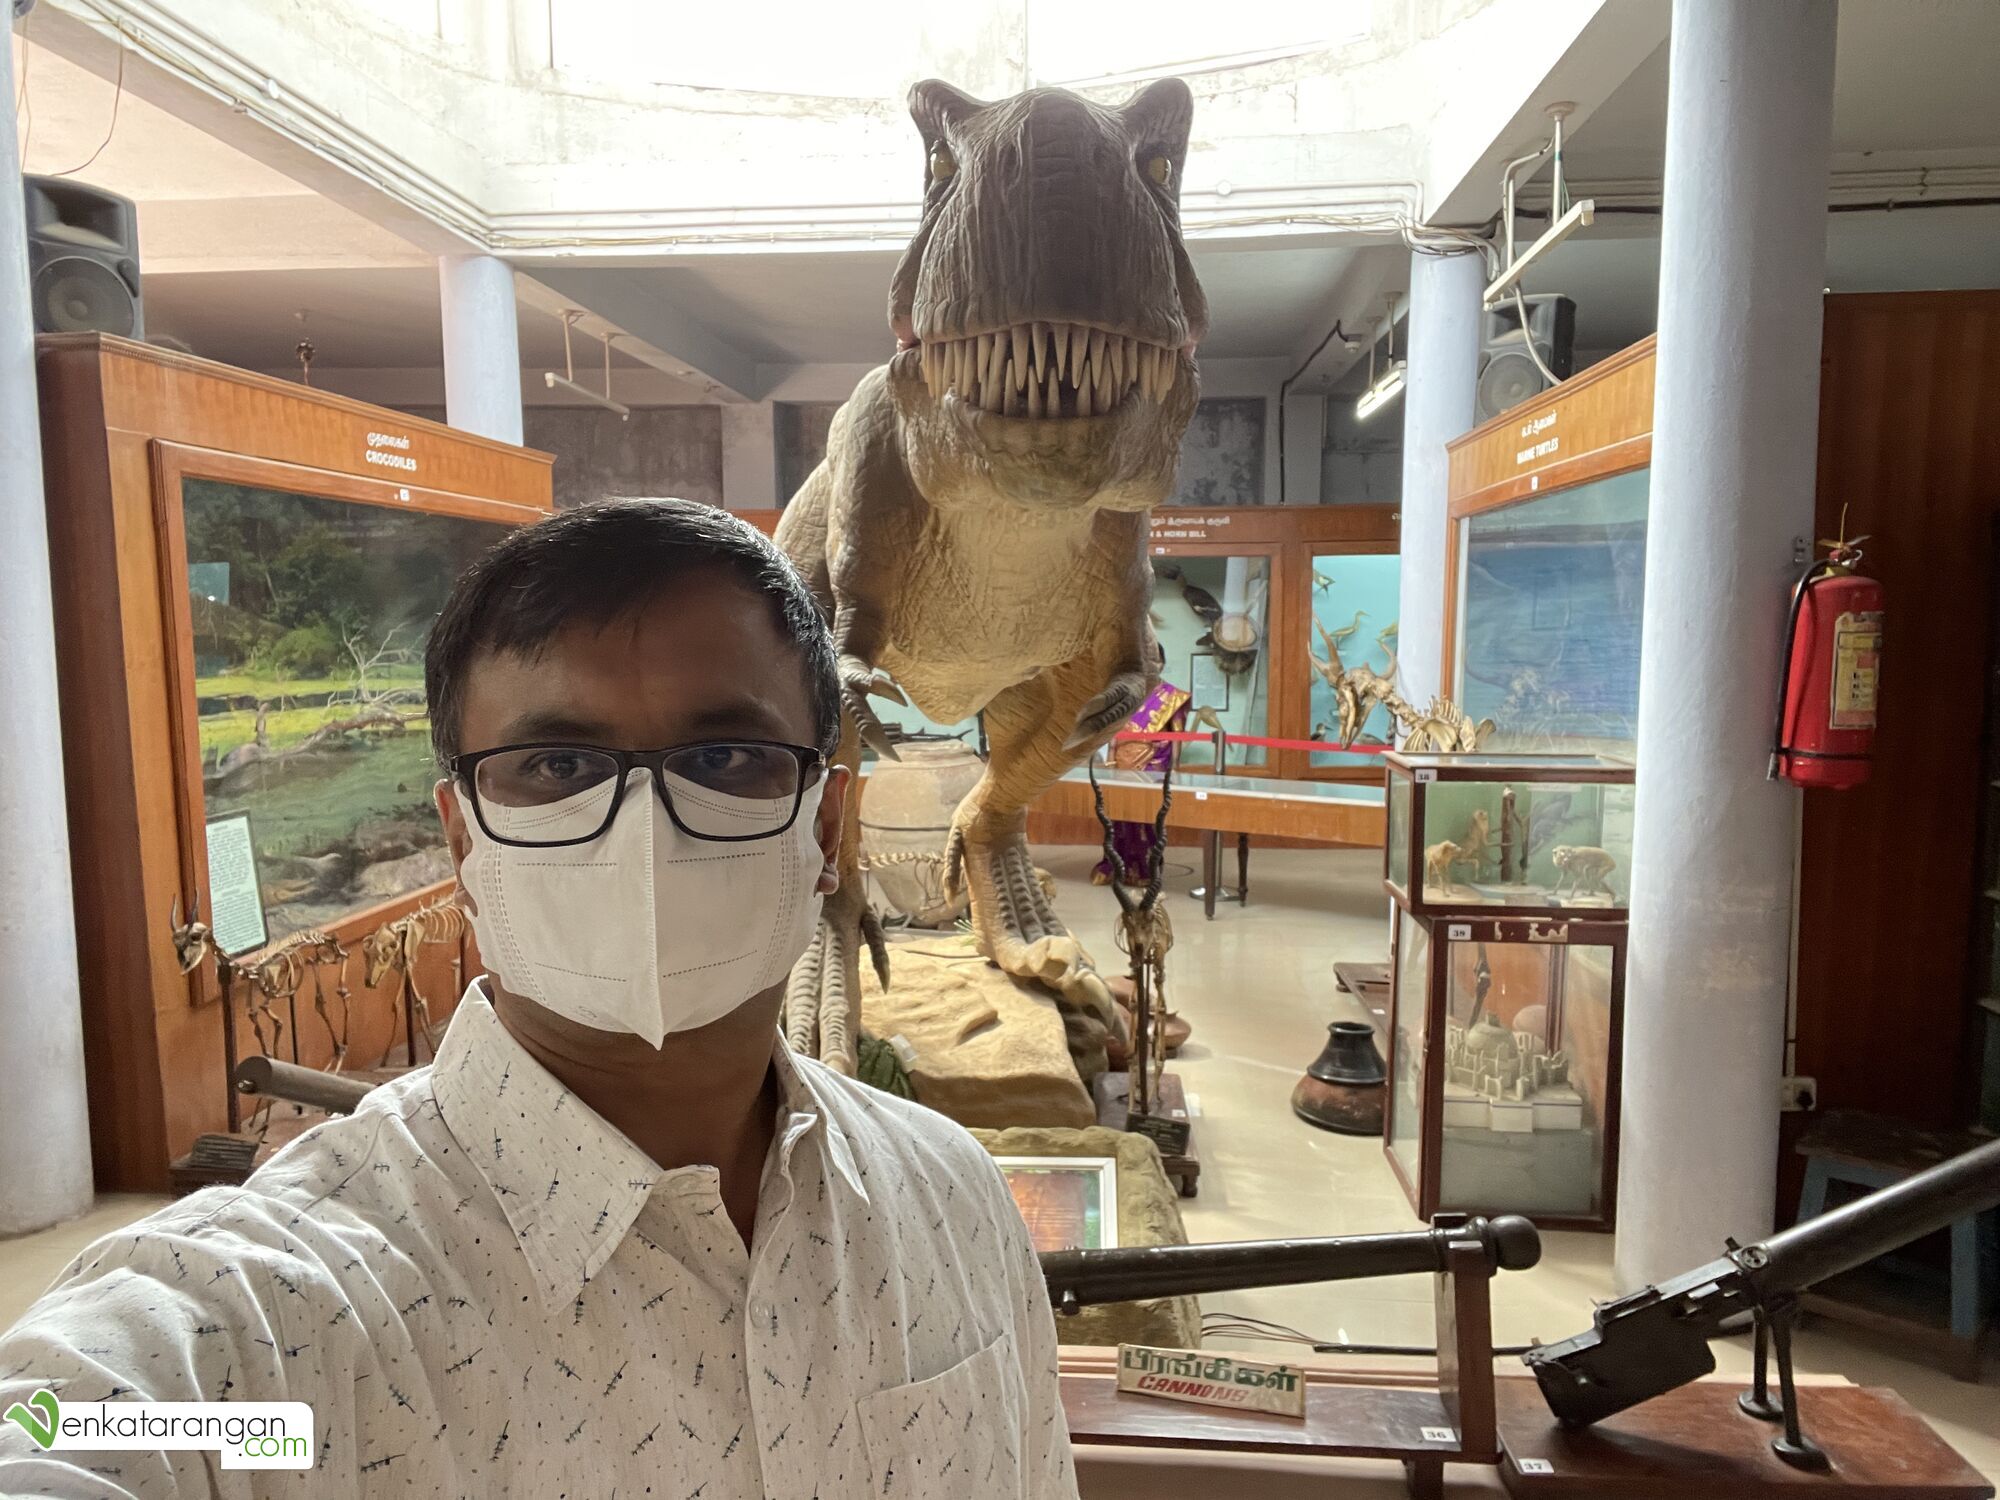 Venkatarangan in front of a Dinosaur display